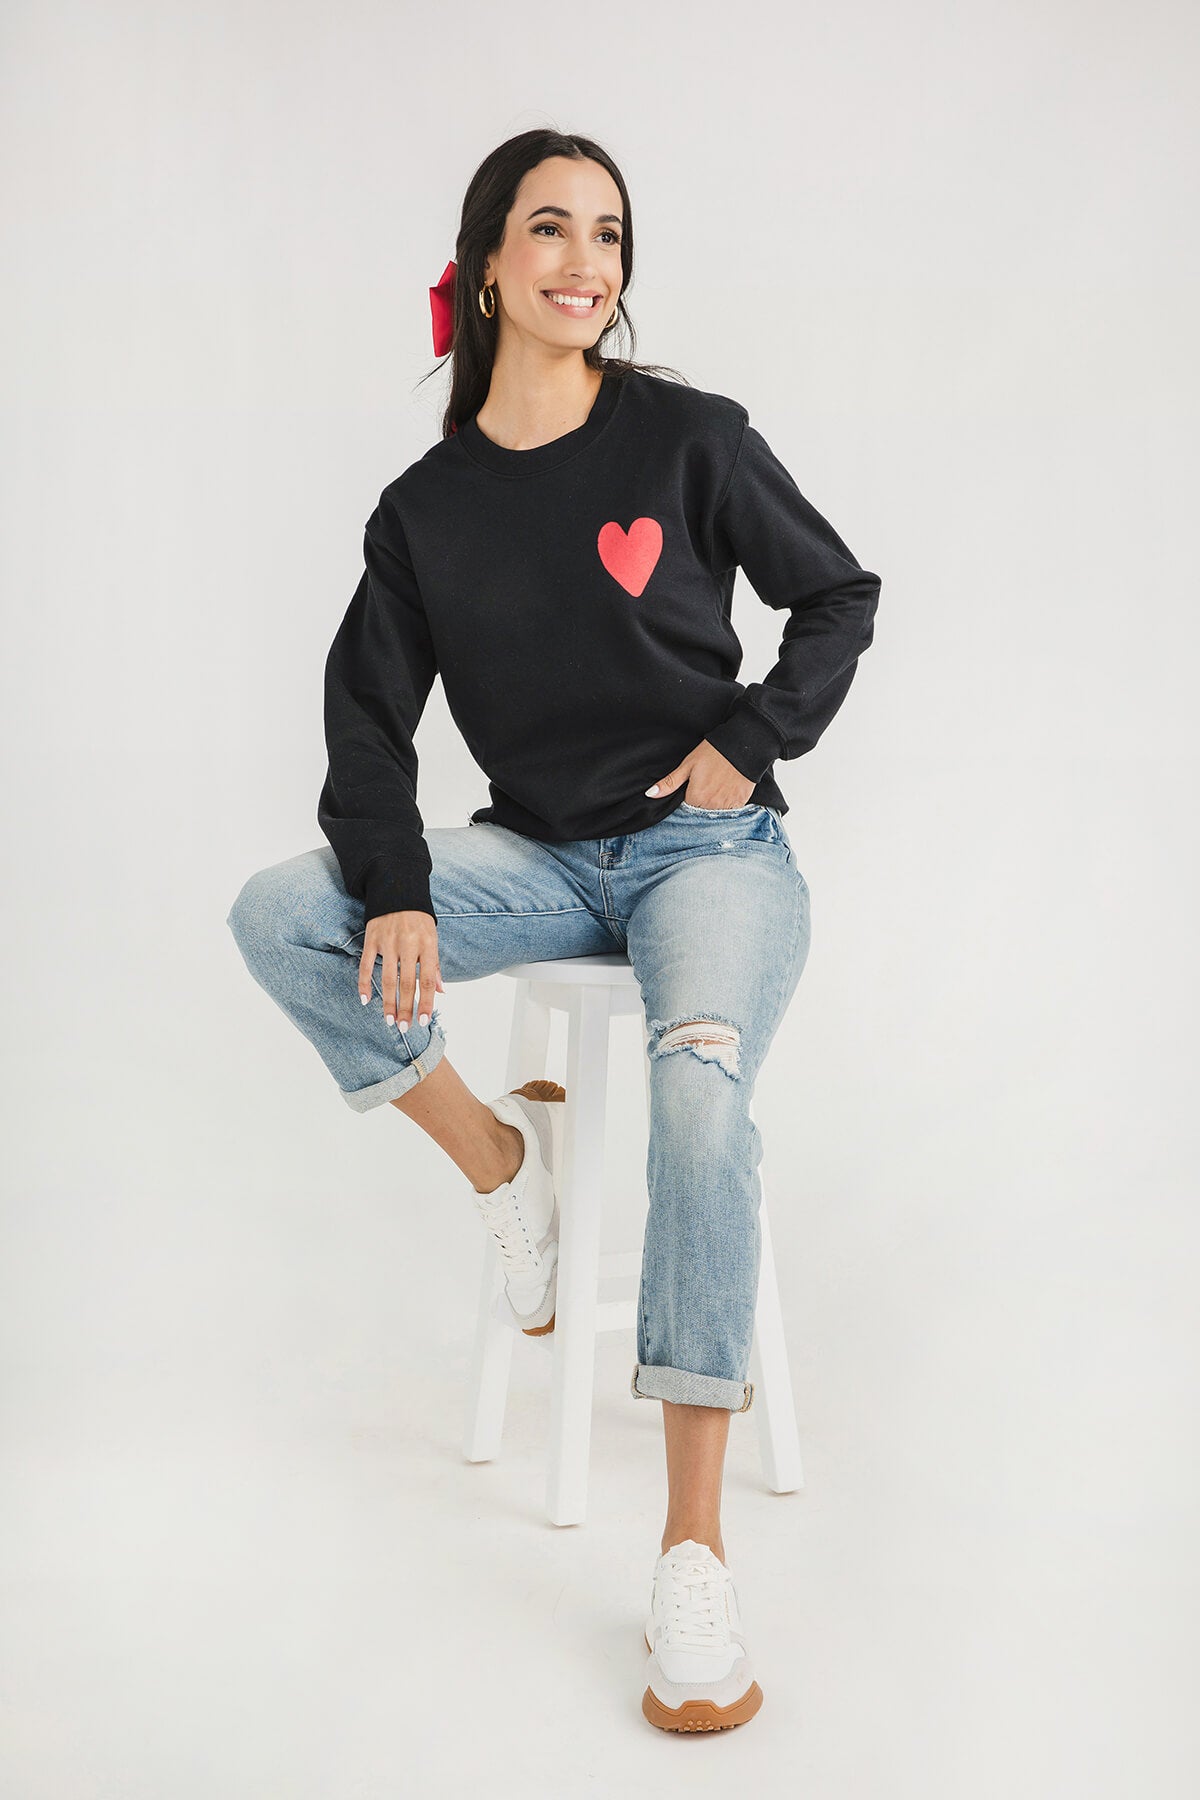 Blume + Co Pocket Heart Graphic Sweatshirt